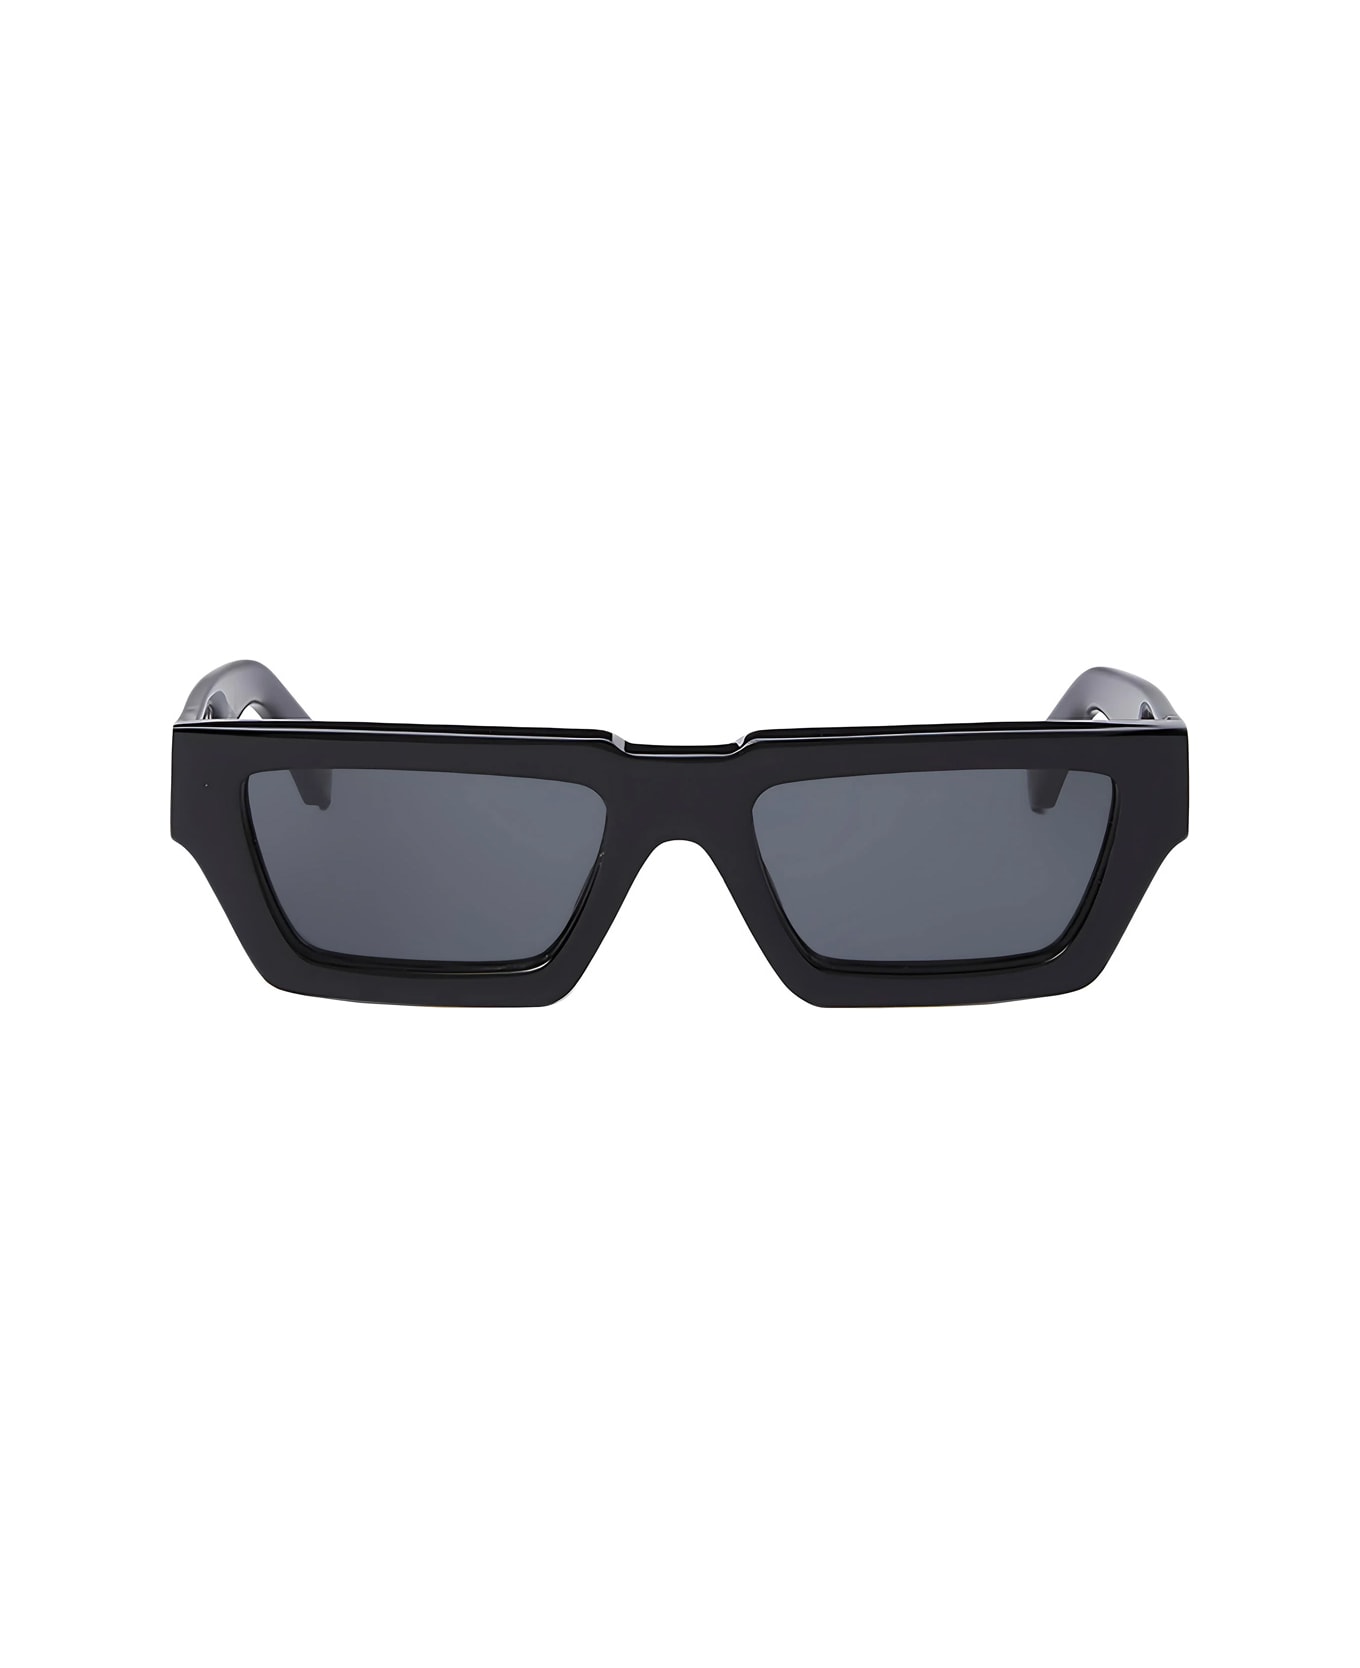 Off-White Oeri129 Manchester 1007 Black Sunglasses - Nero